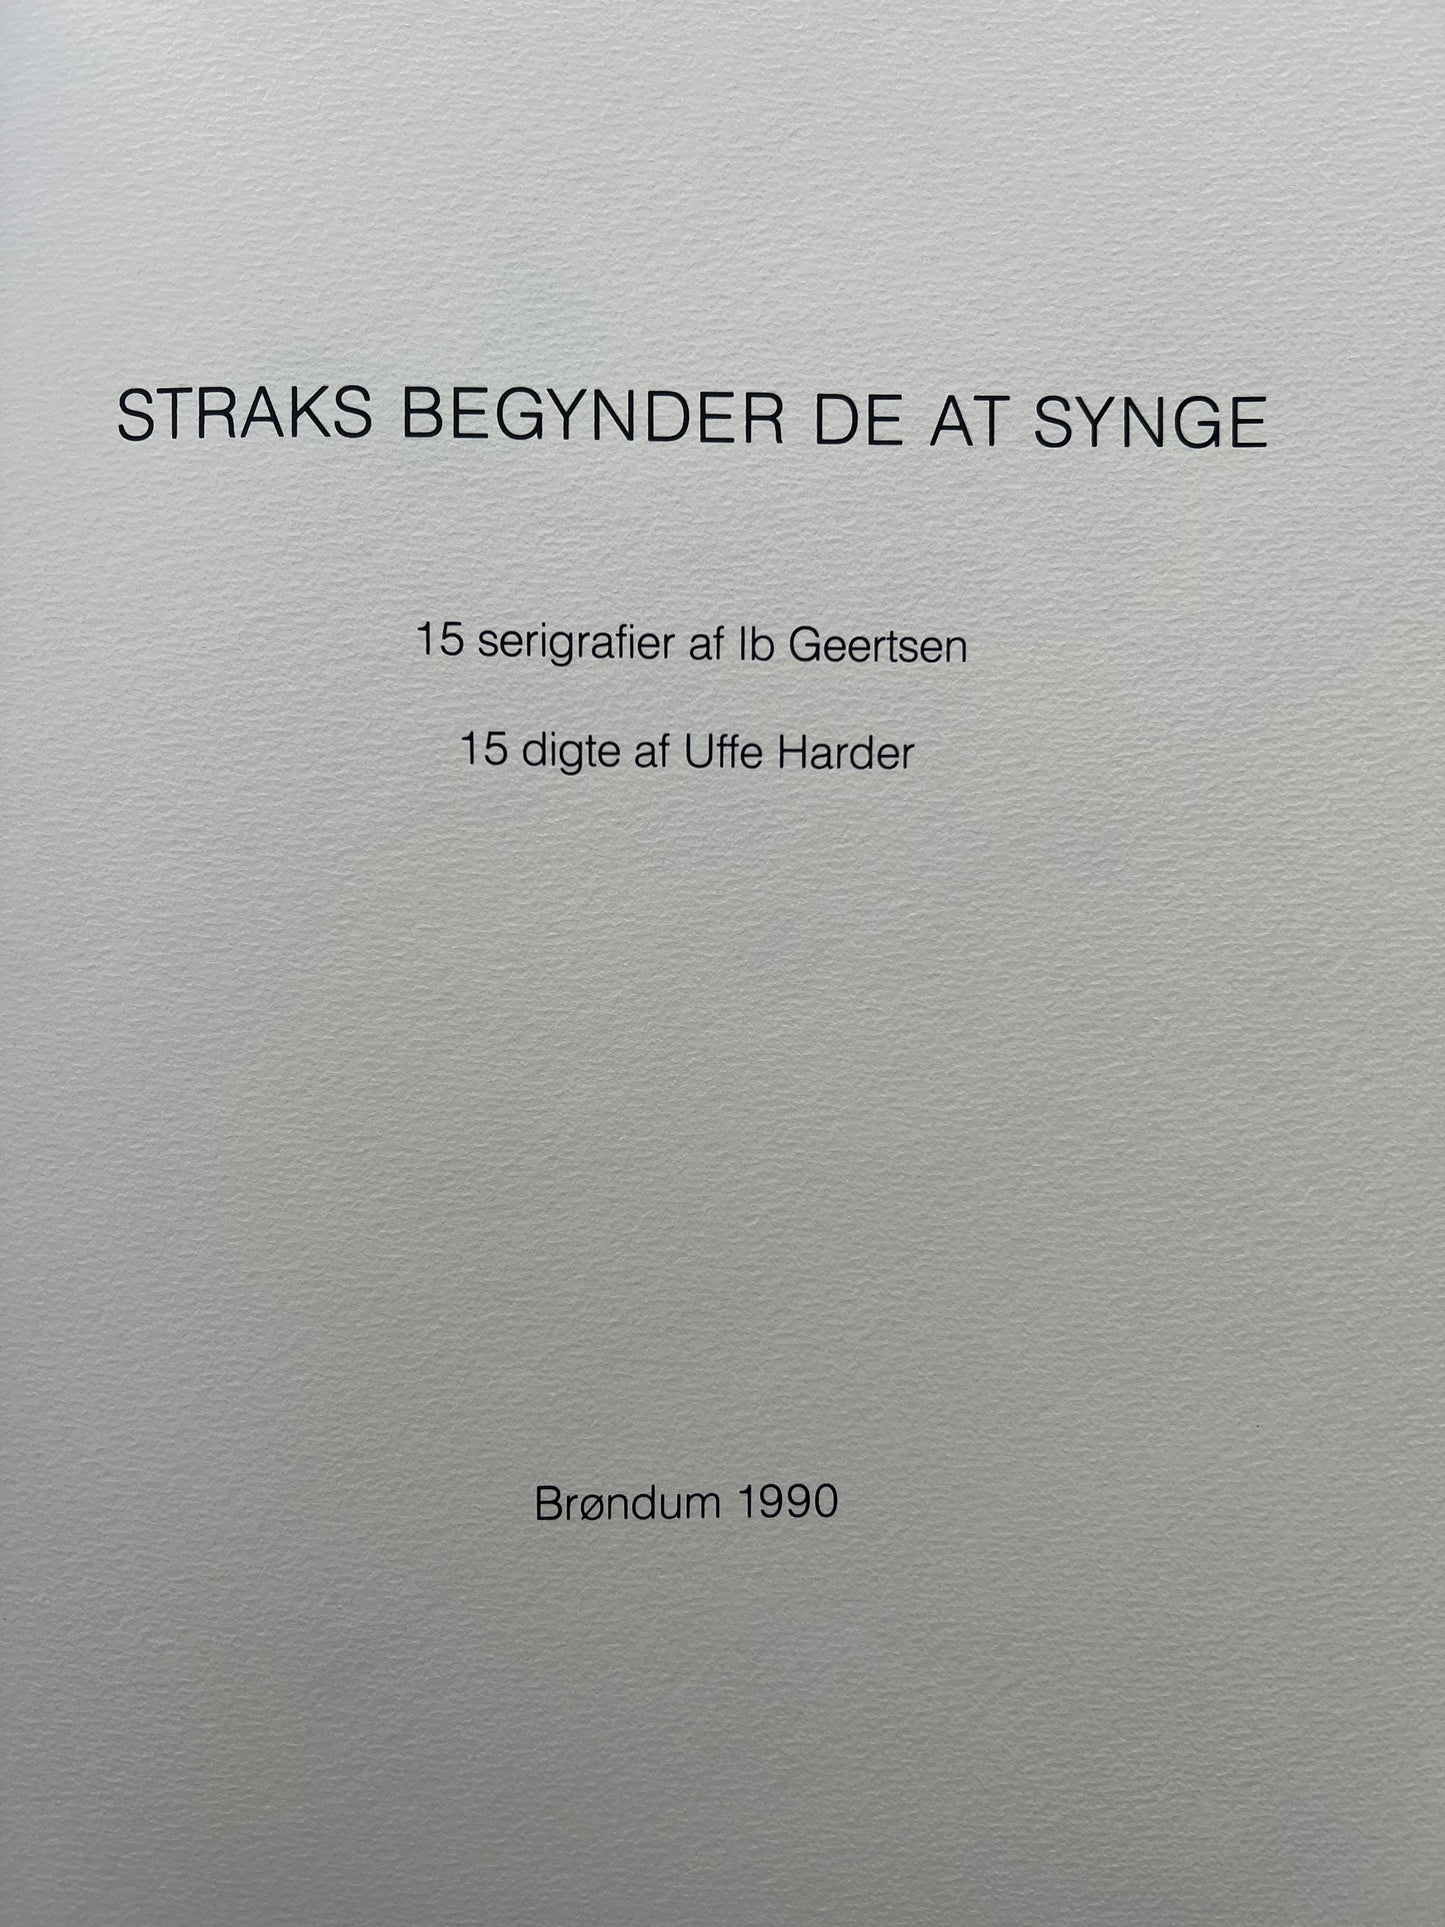 Uffe Harder & Ib Geertsen. “Straks begynder de at synge”, 1990